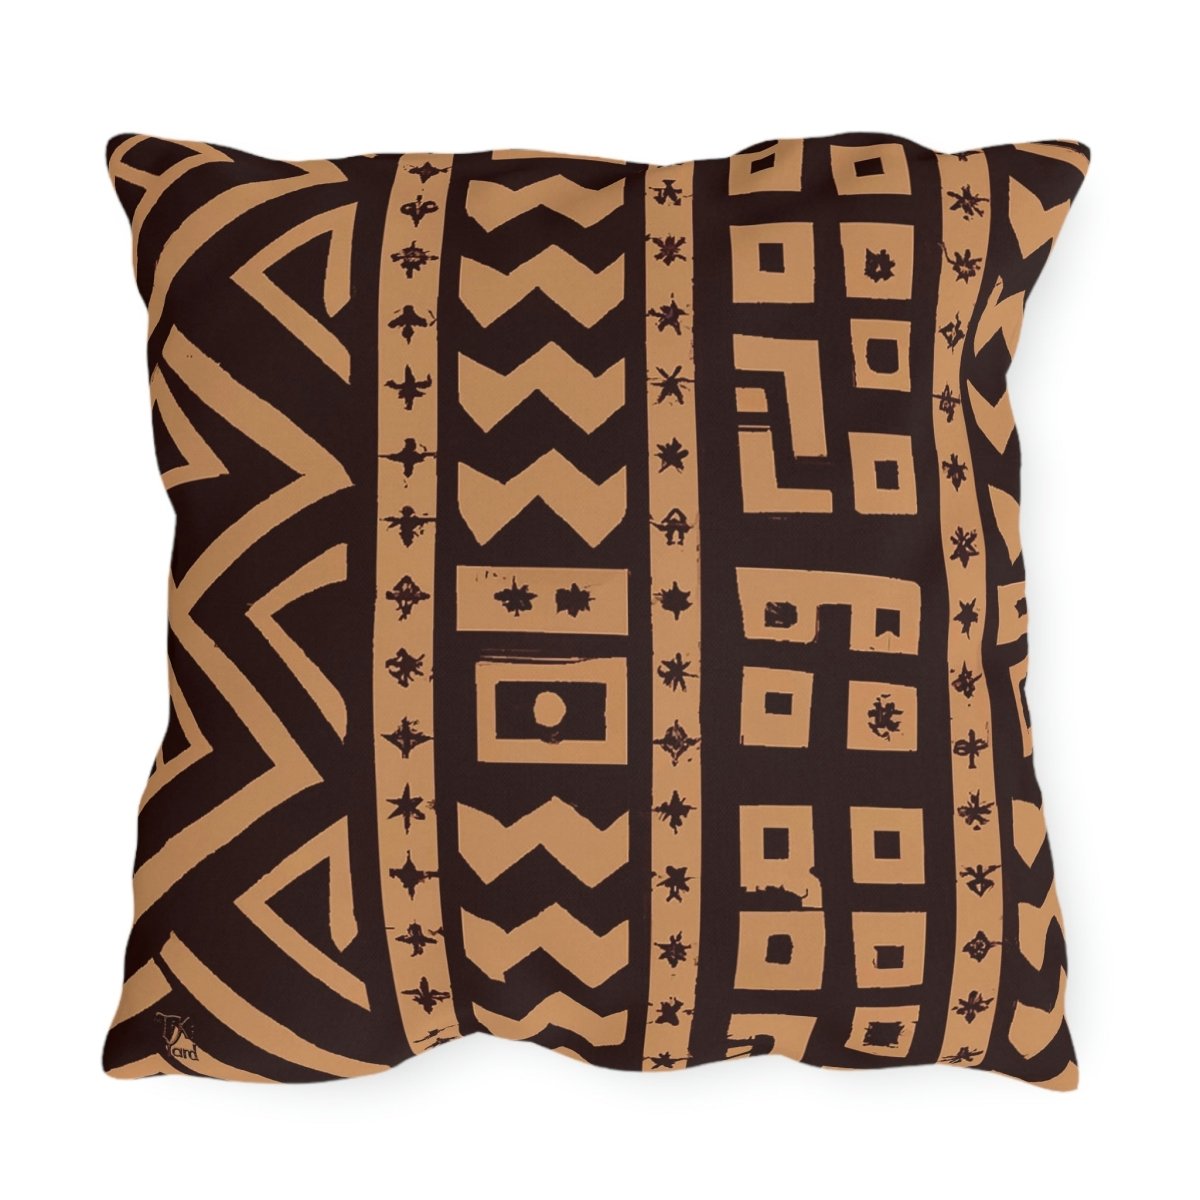 Island Heritage - Outdoor Throw Pillow - The Tiki Yard - Outdoor Throw Pillows